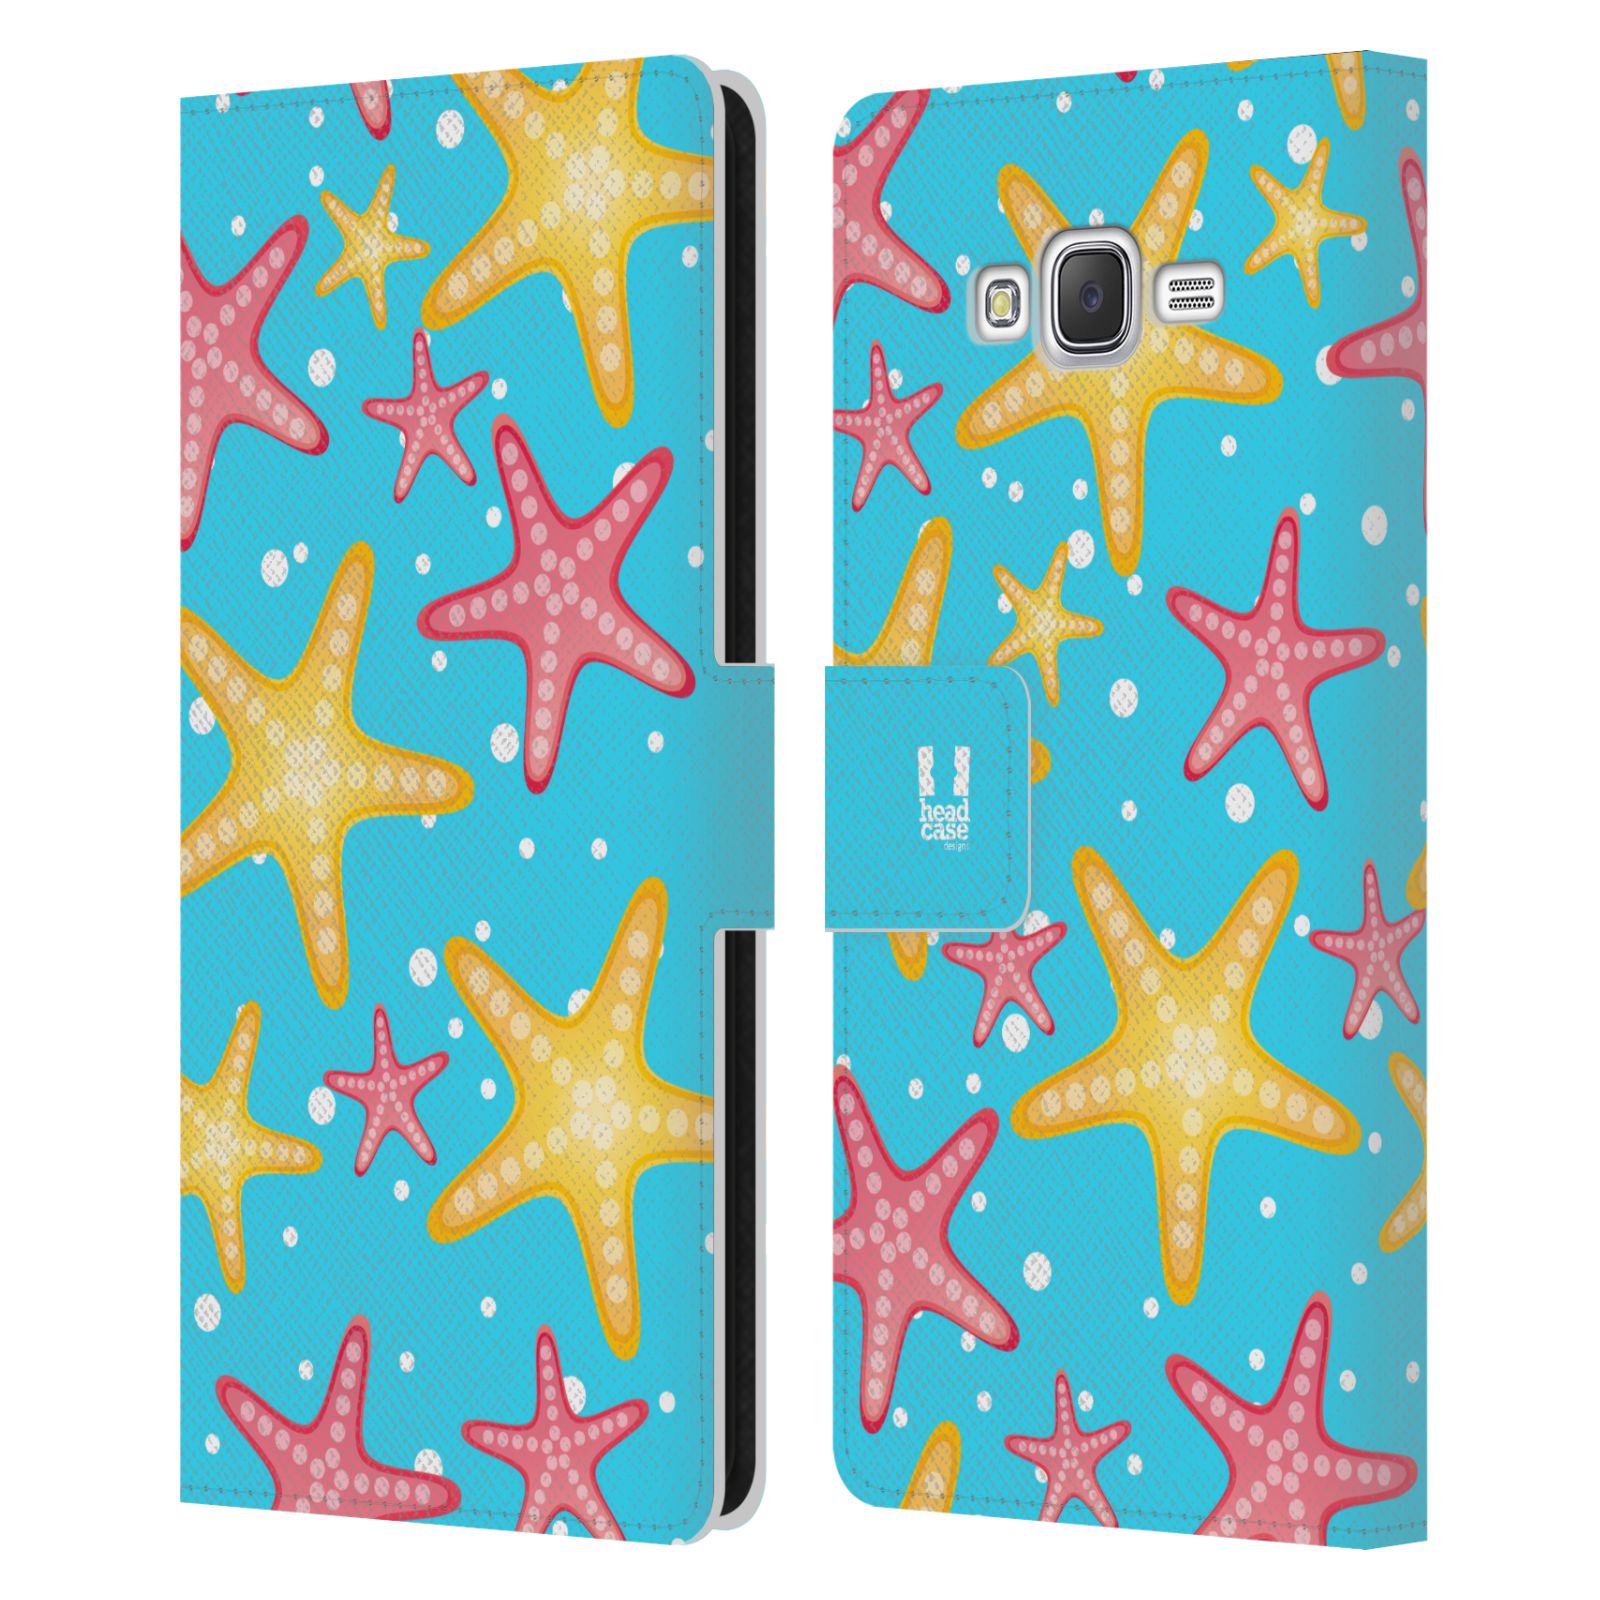 HEAD CASE Flipové pouzdro pro mobil Samsung Galaxy J7, J700 Mořský živočich hvězdice modrá barva pozadí